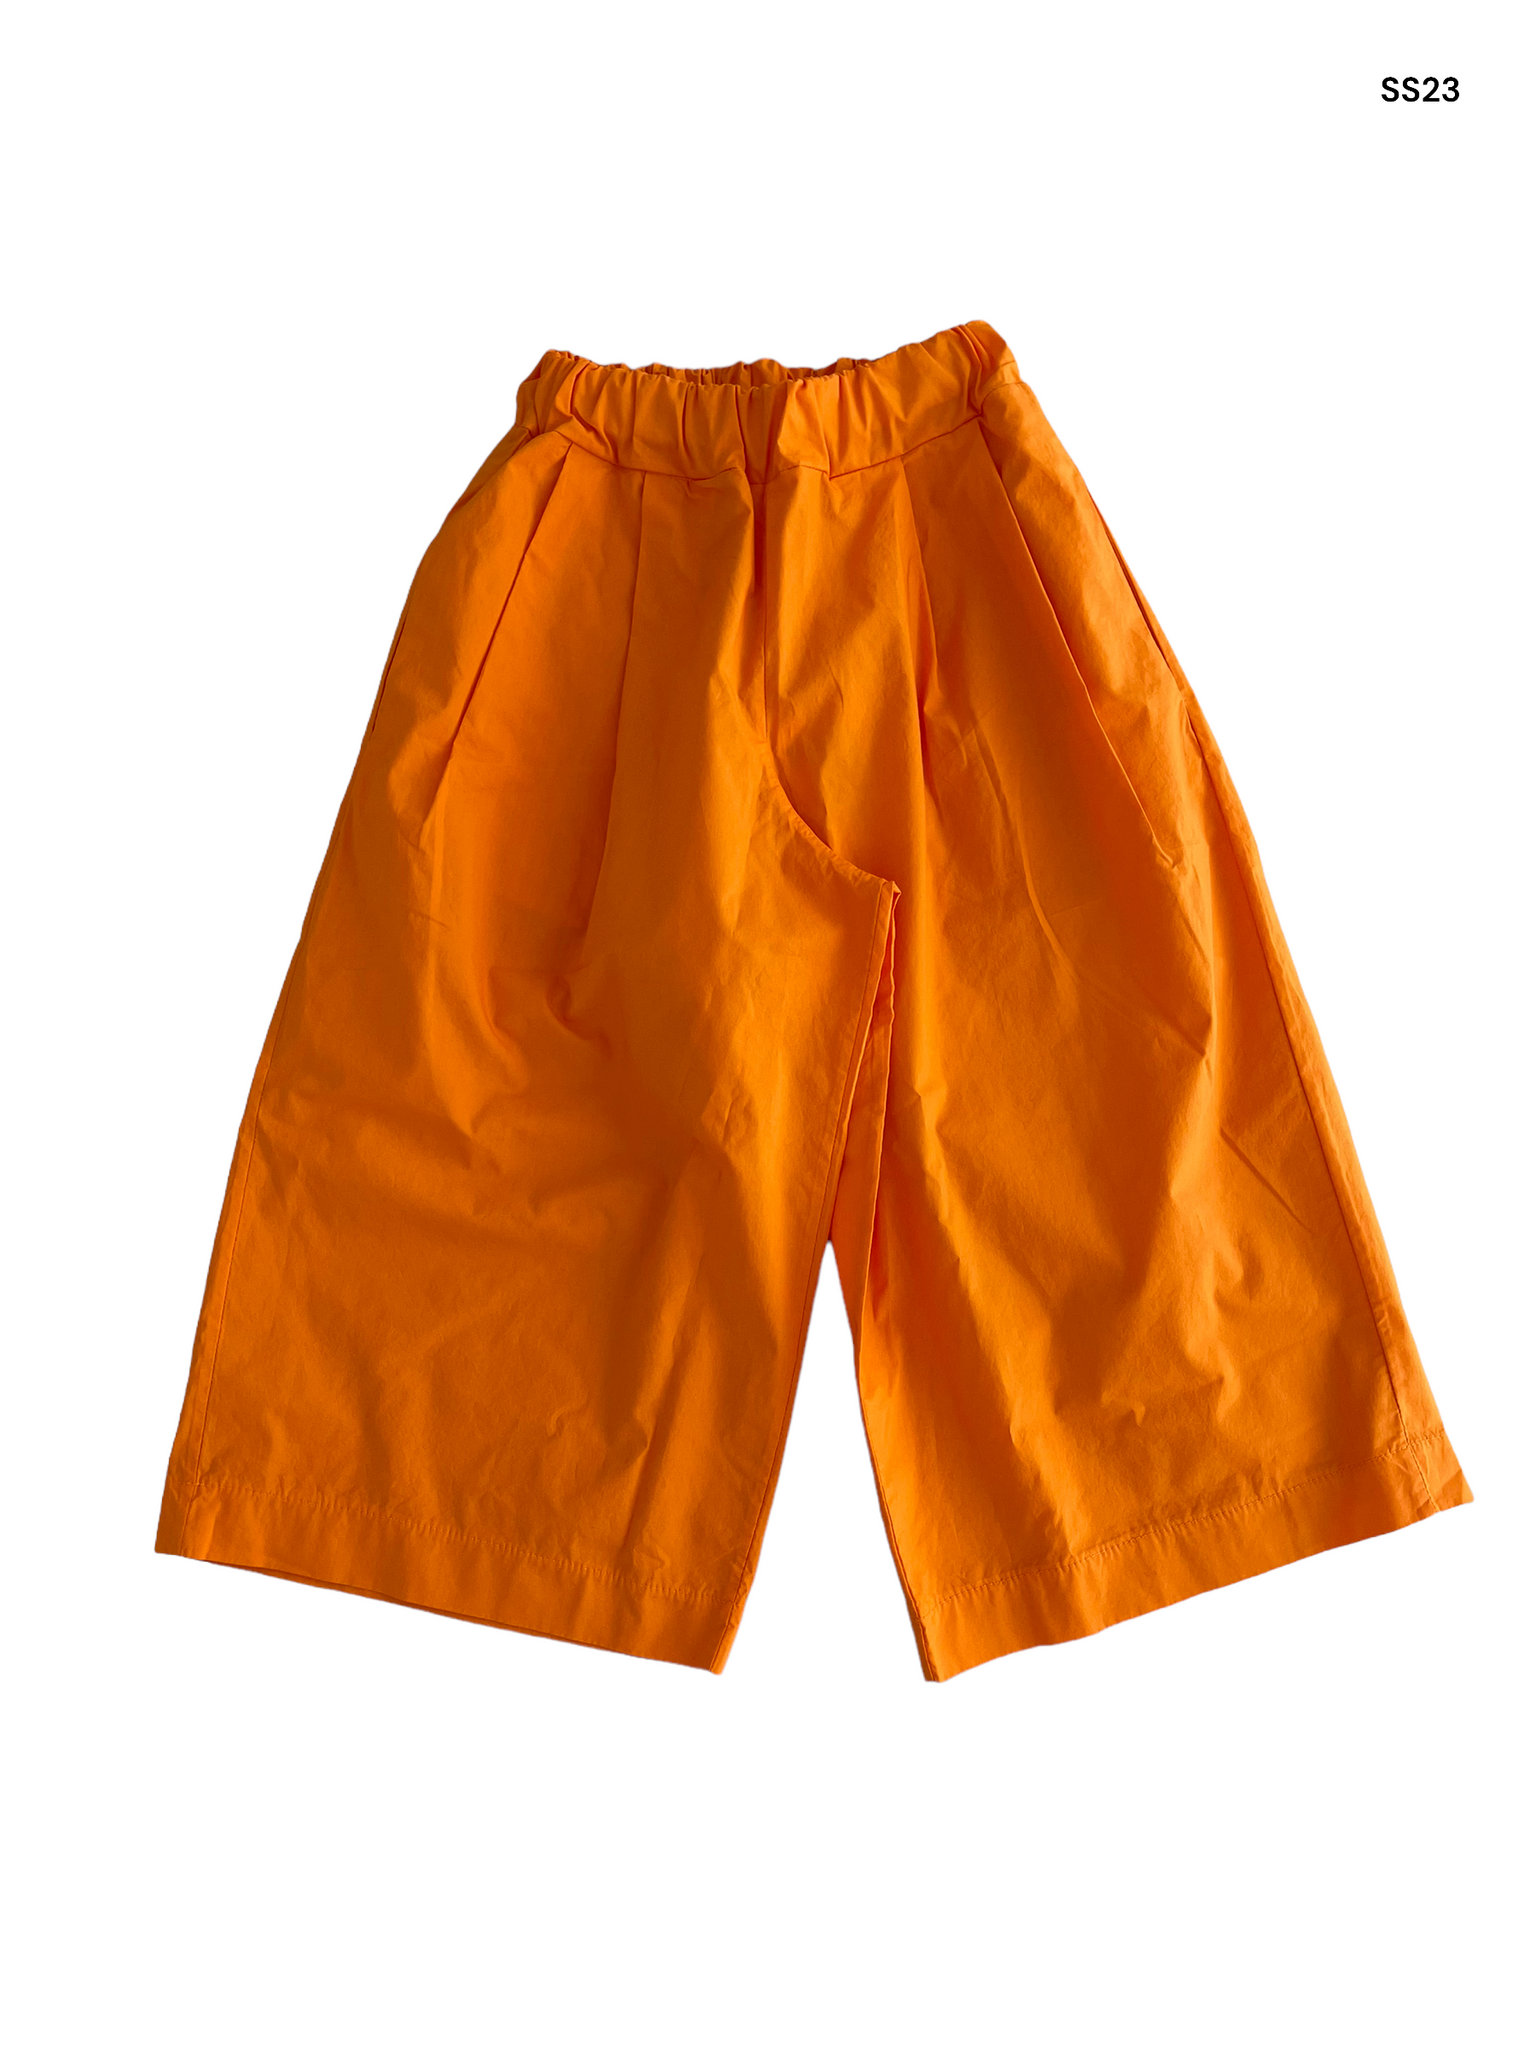 Pantalone arancio per neonata e bambina